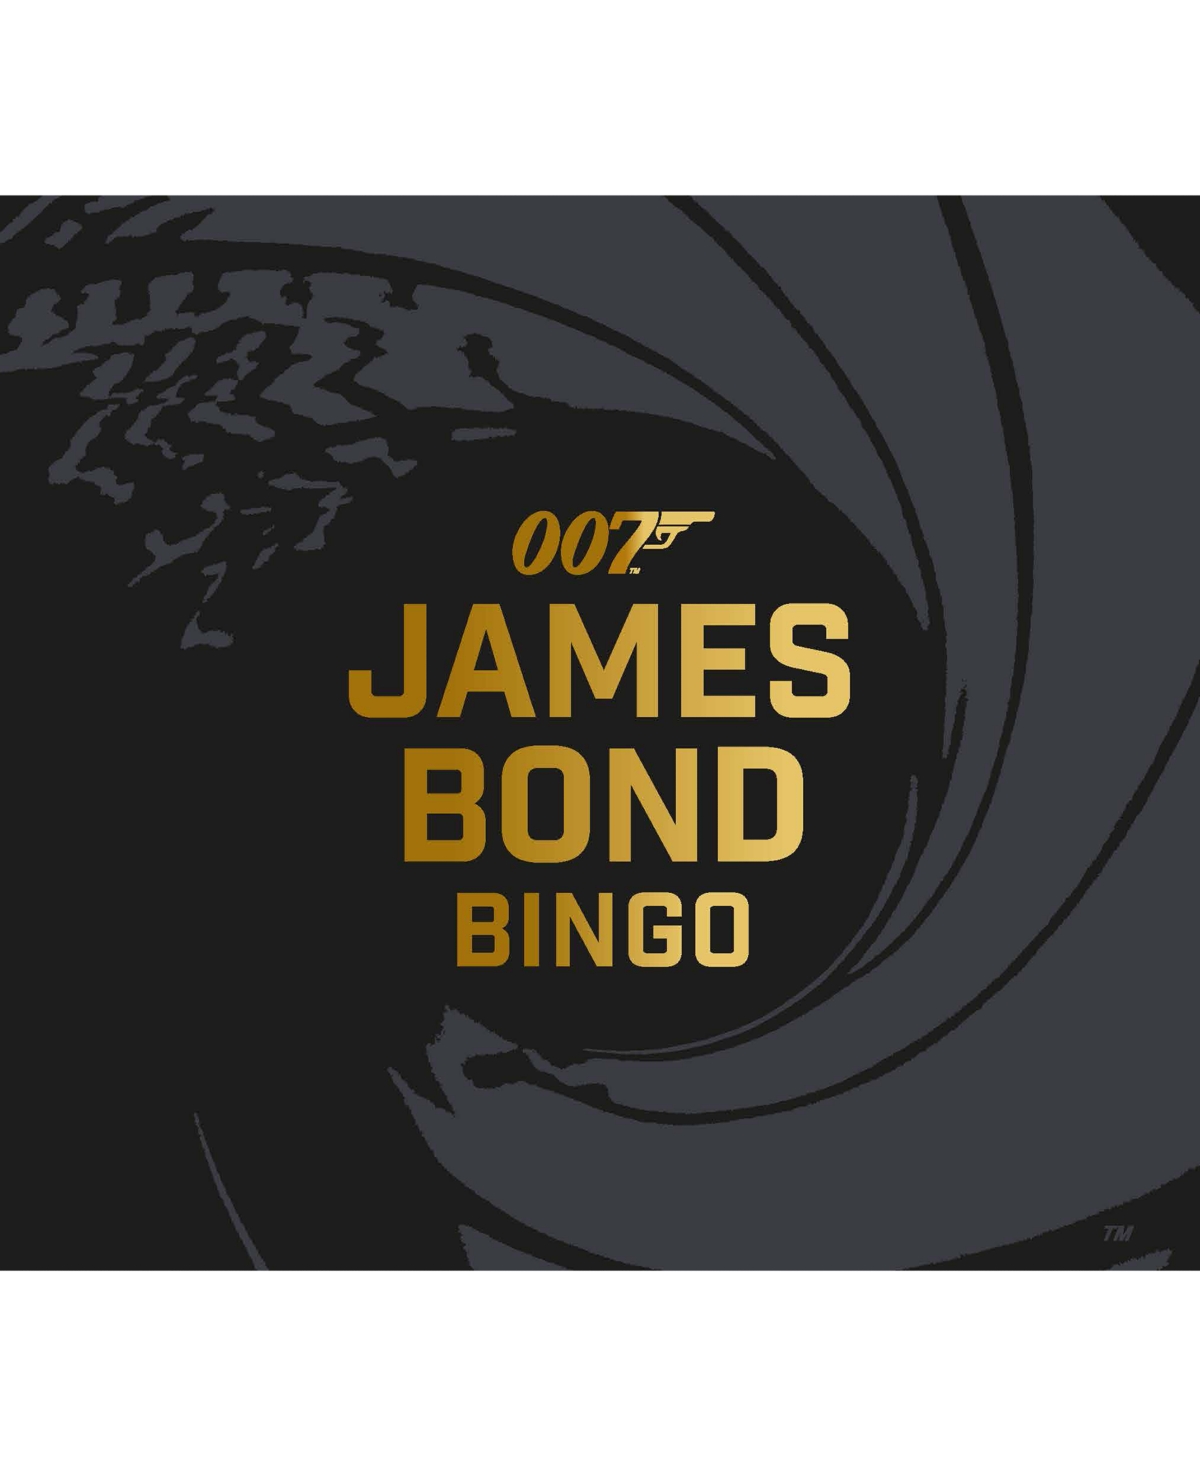 ISBN 9781913947804 product image for Chronicle Books James Bond Bingo | upcitemdb.com